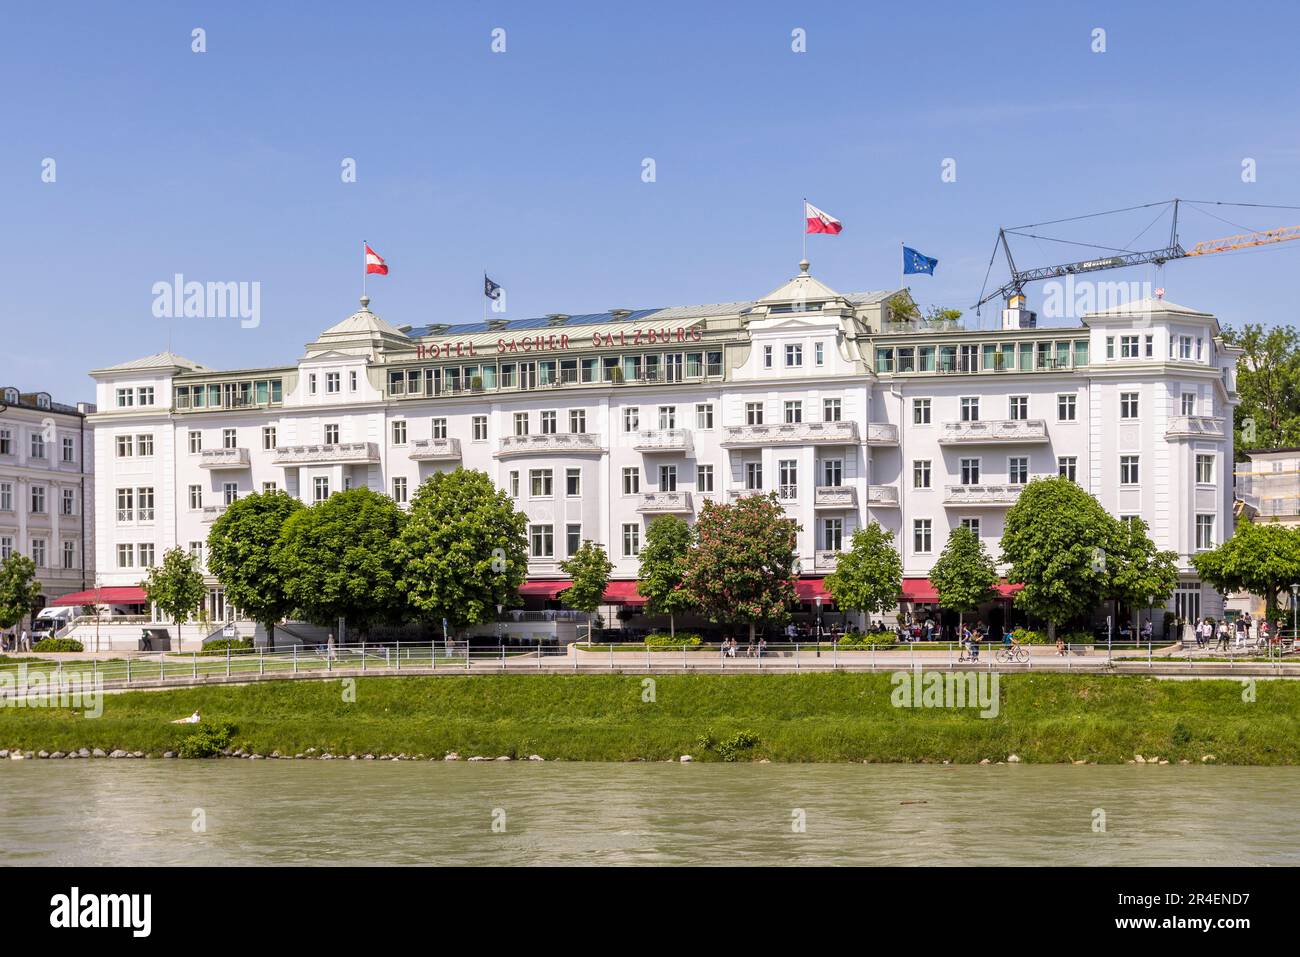 Hotel Sacher on the banks of the Salzach in Salzburg, Austria Stock Photo